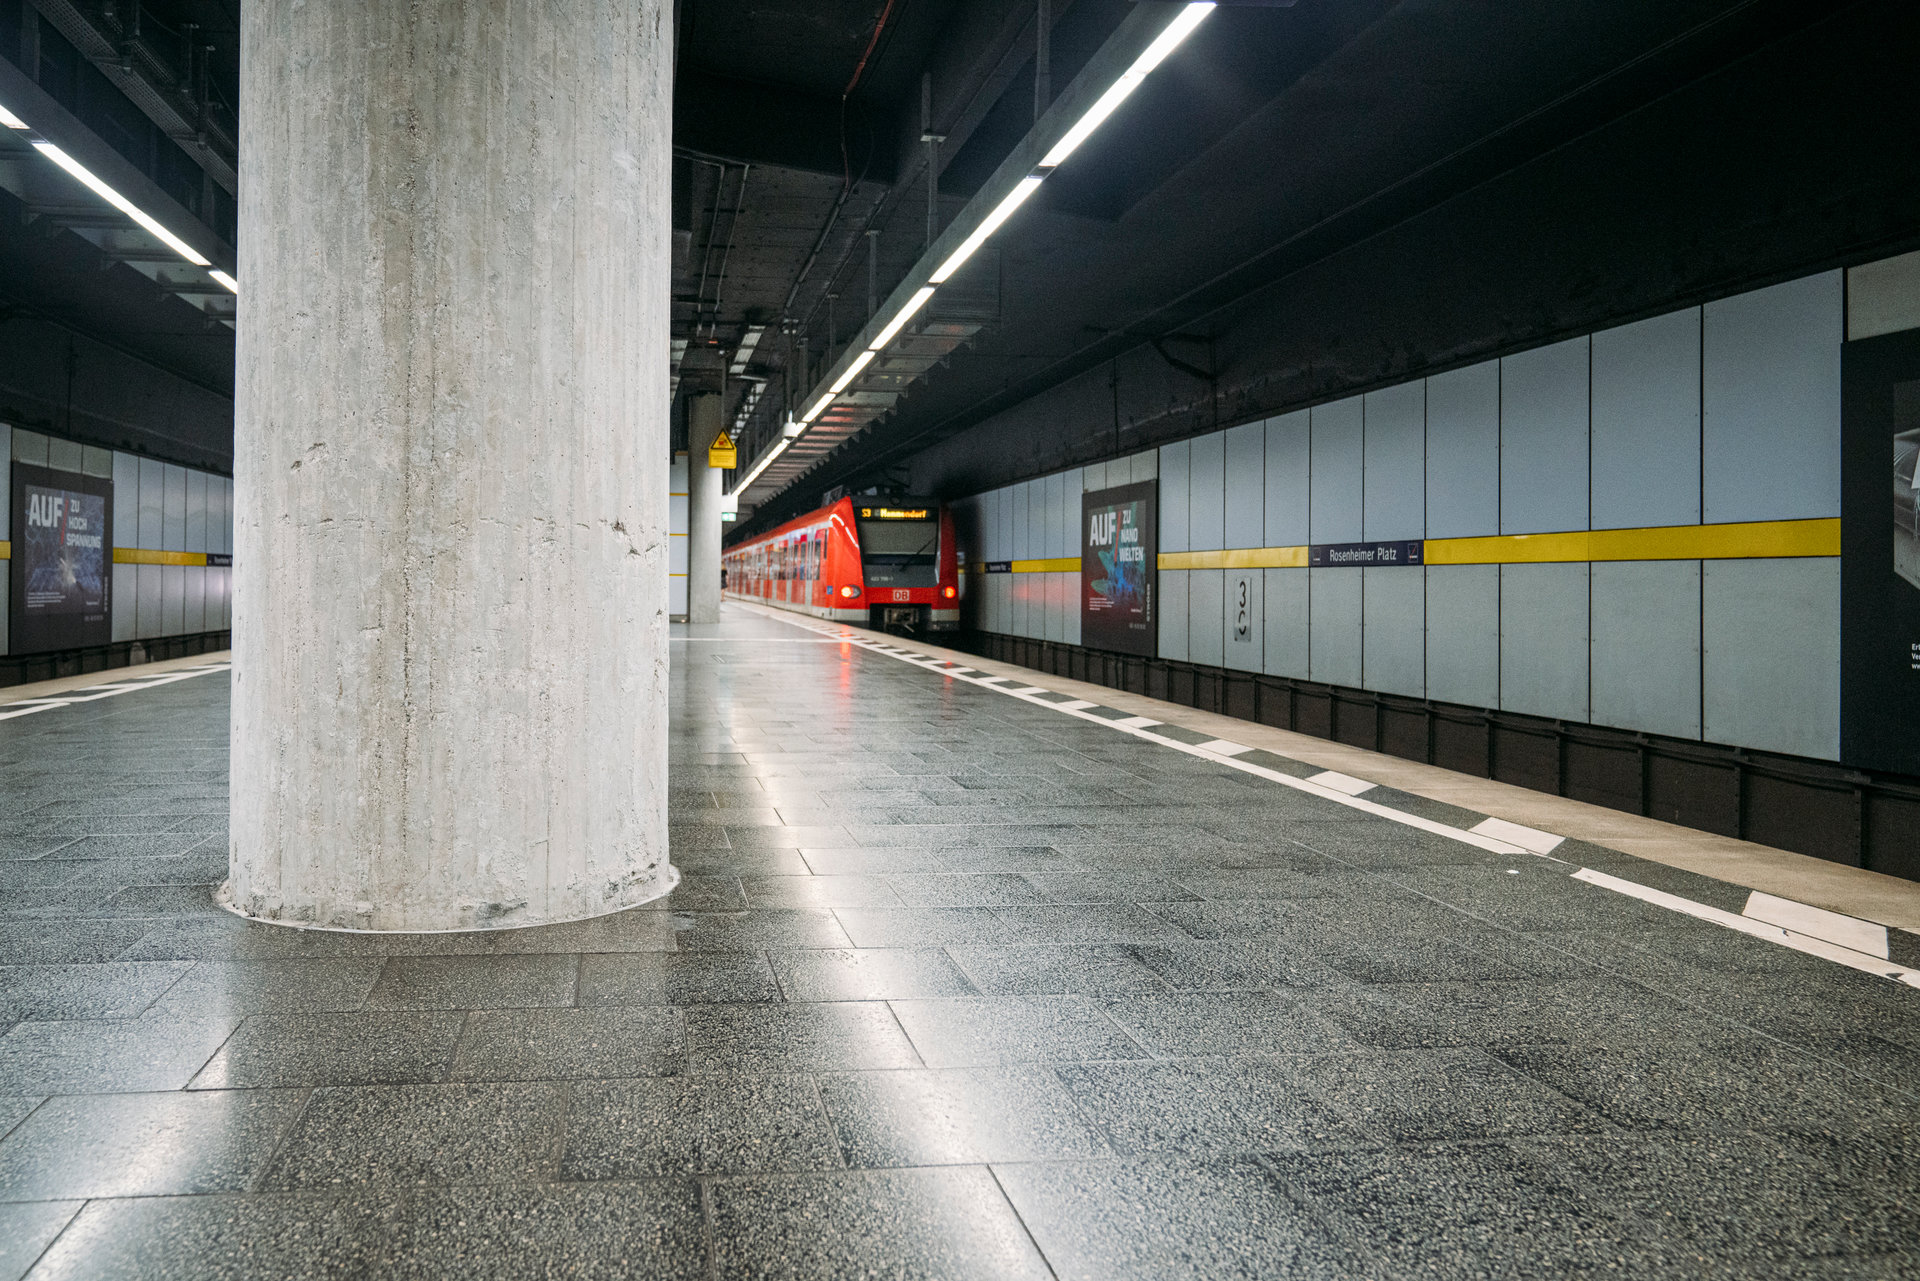 S-Bahn_muenchen, Rosenheimerplatz, Modernisierung | © wunderland media